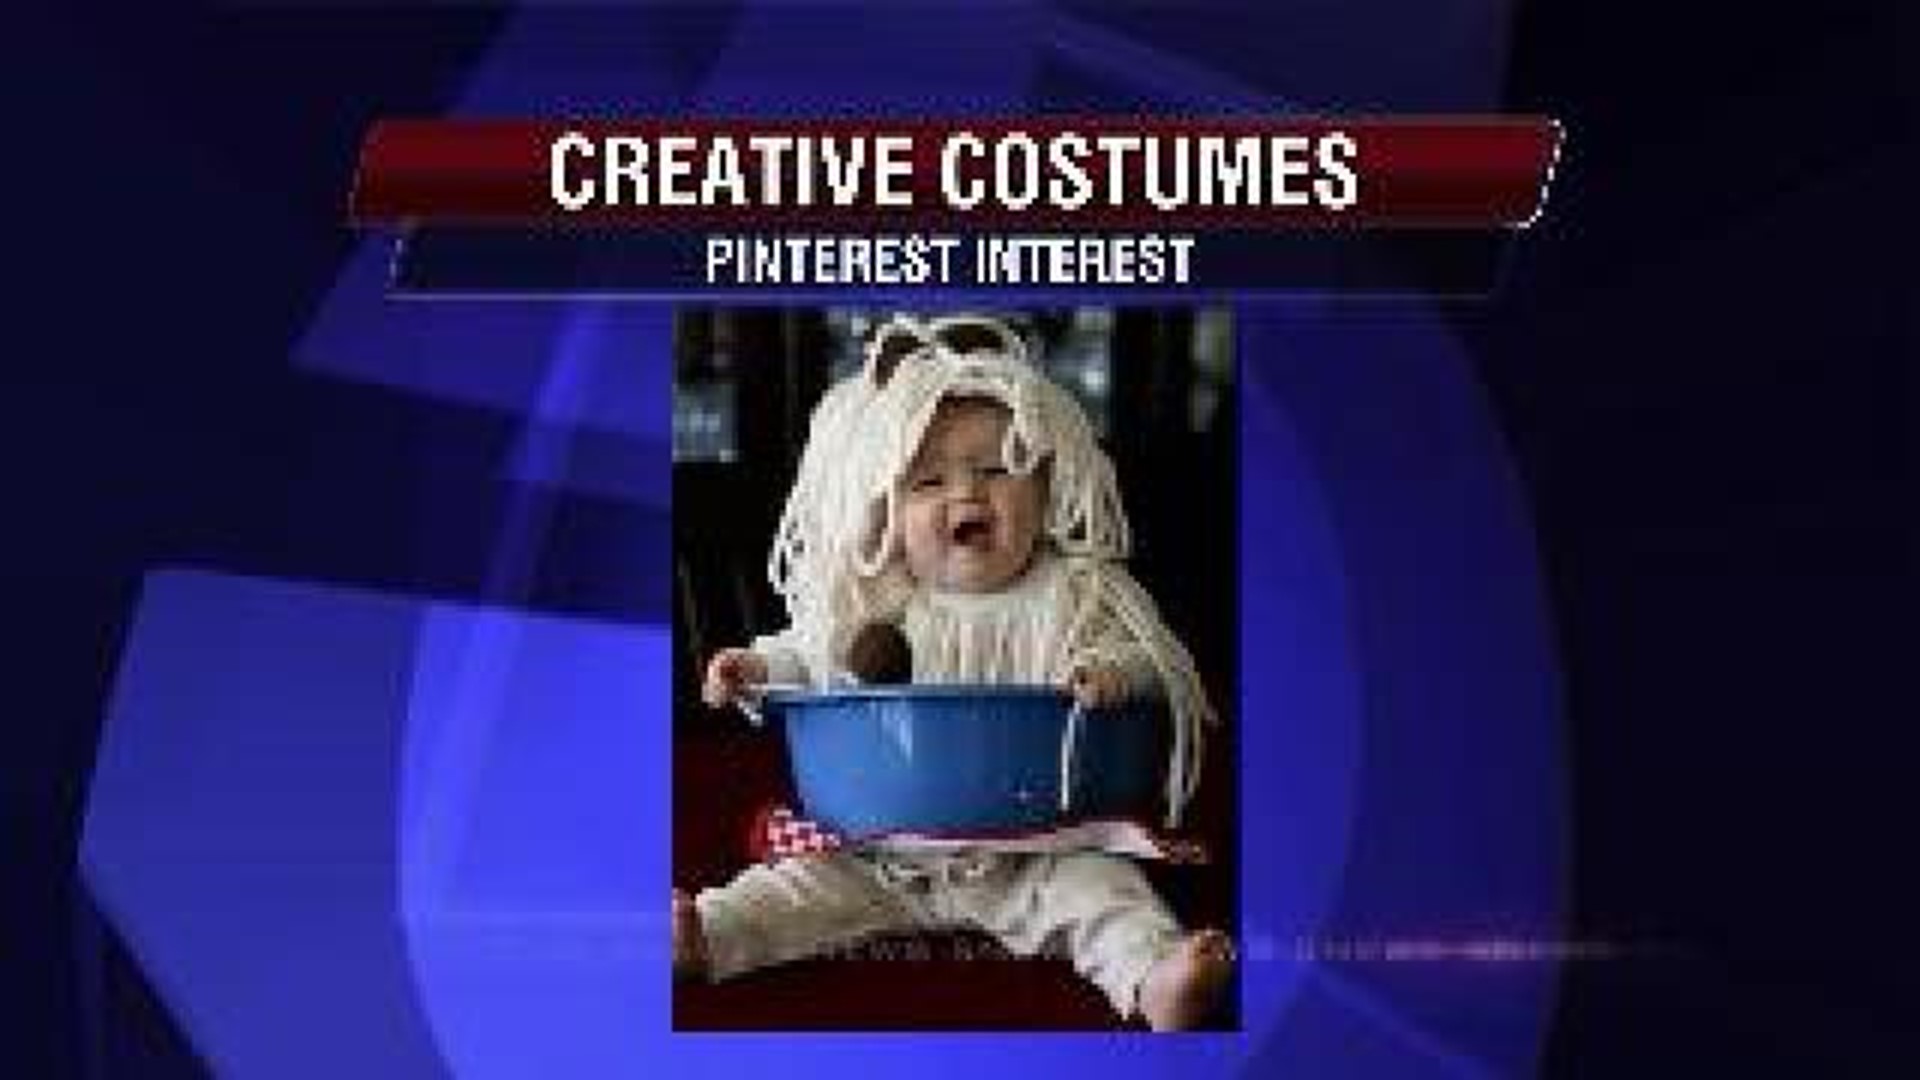 Pinterest Interest: Creative Costumes